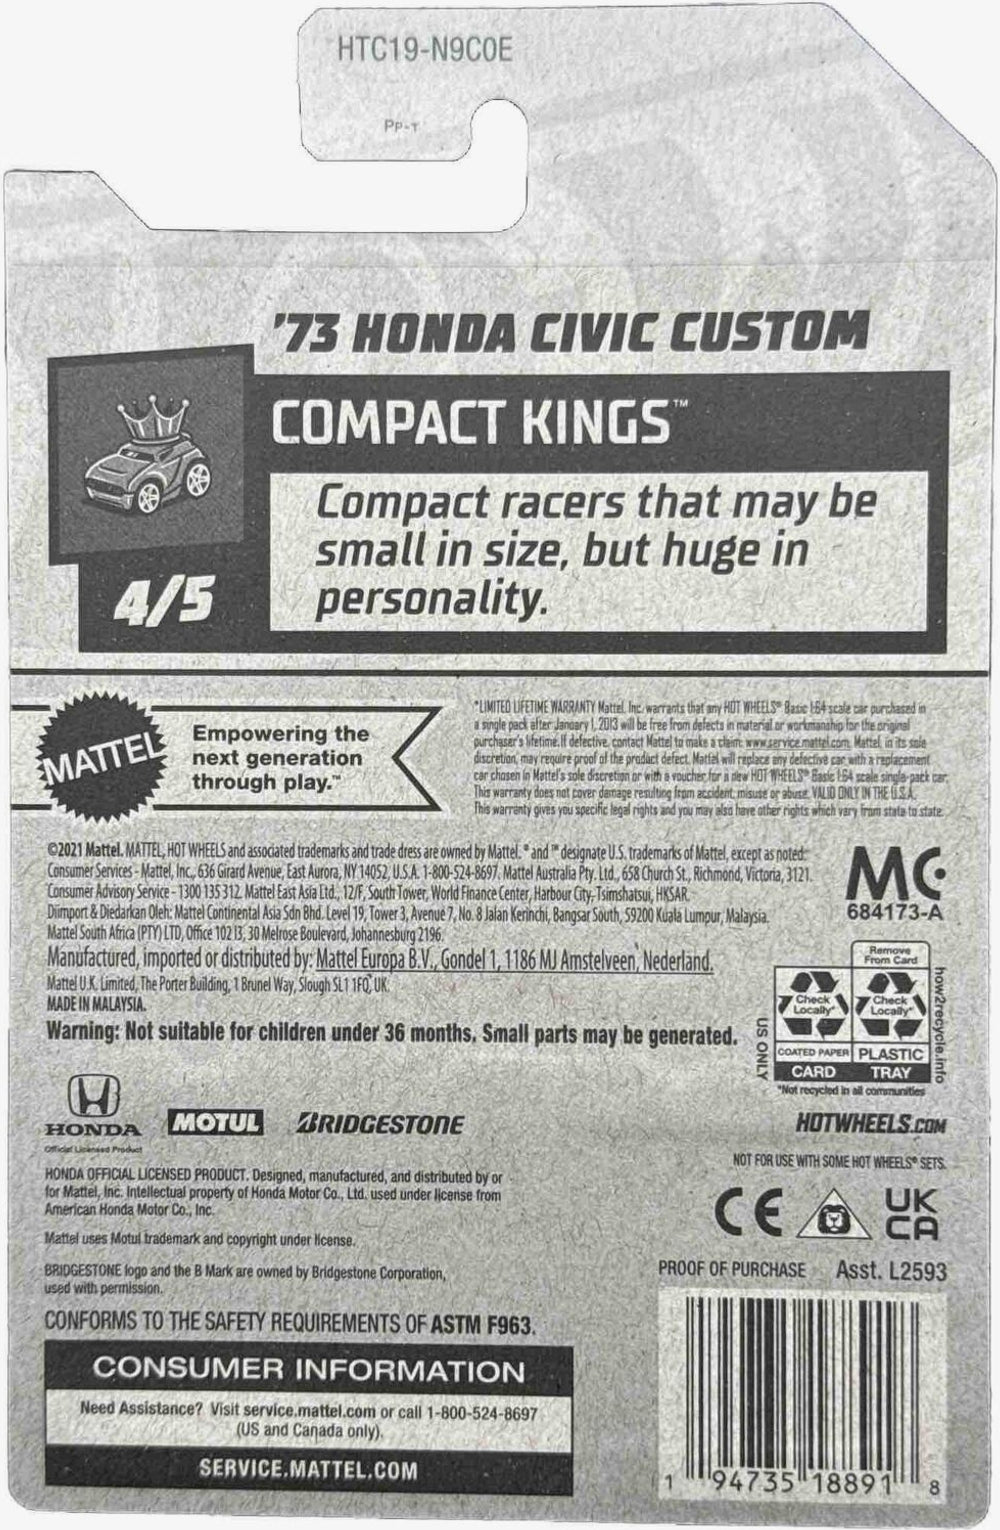 Hot Wheels '73 Honda Civic Custom HW Compact Kings HTC19